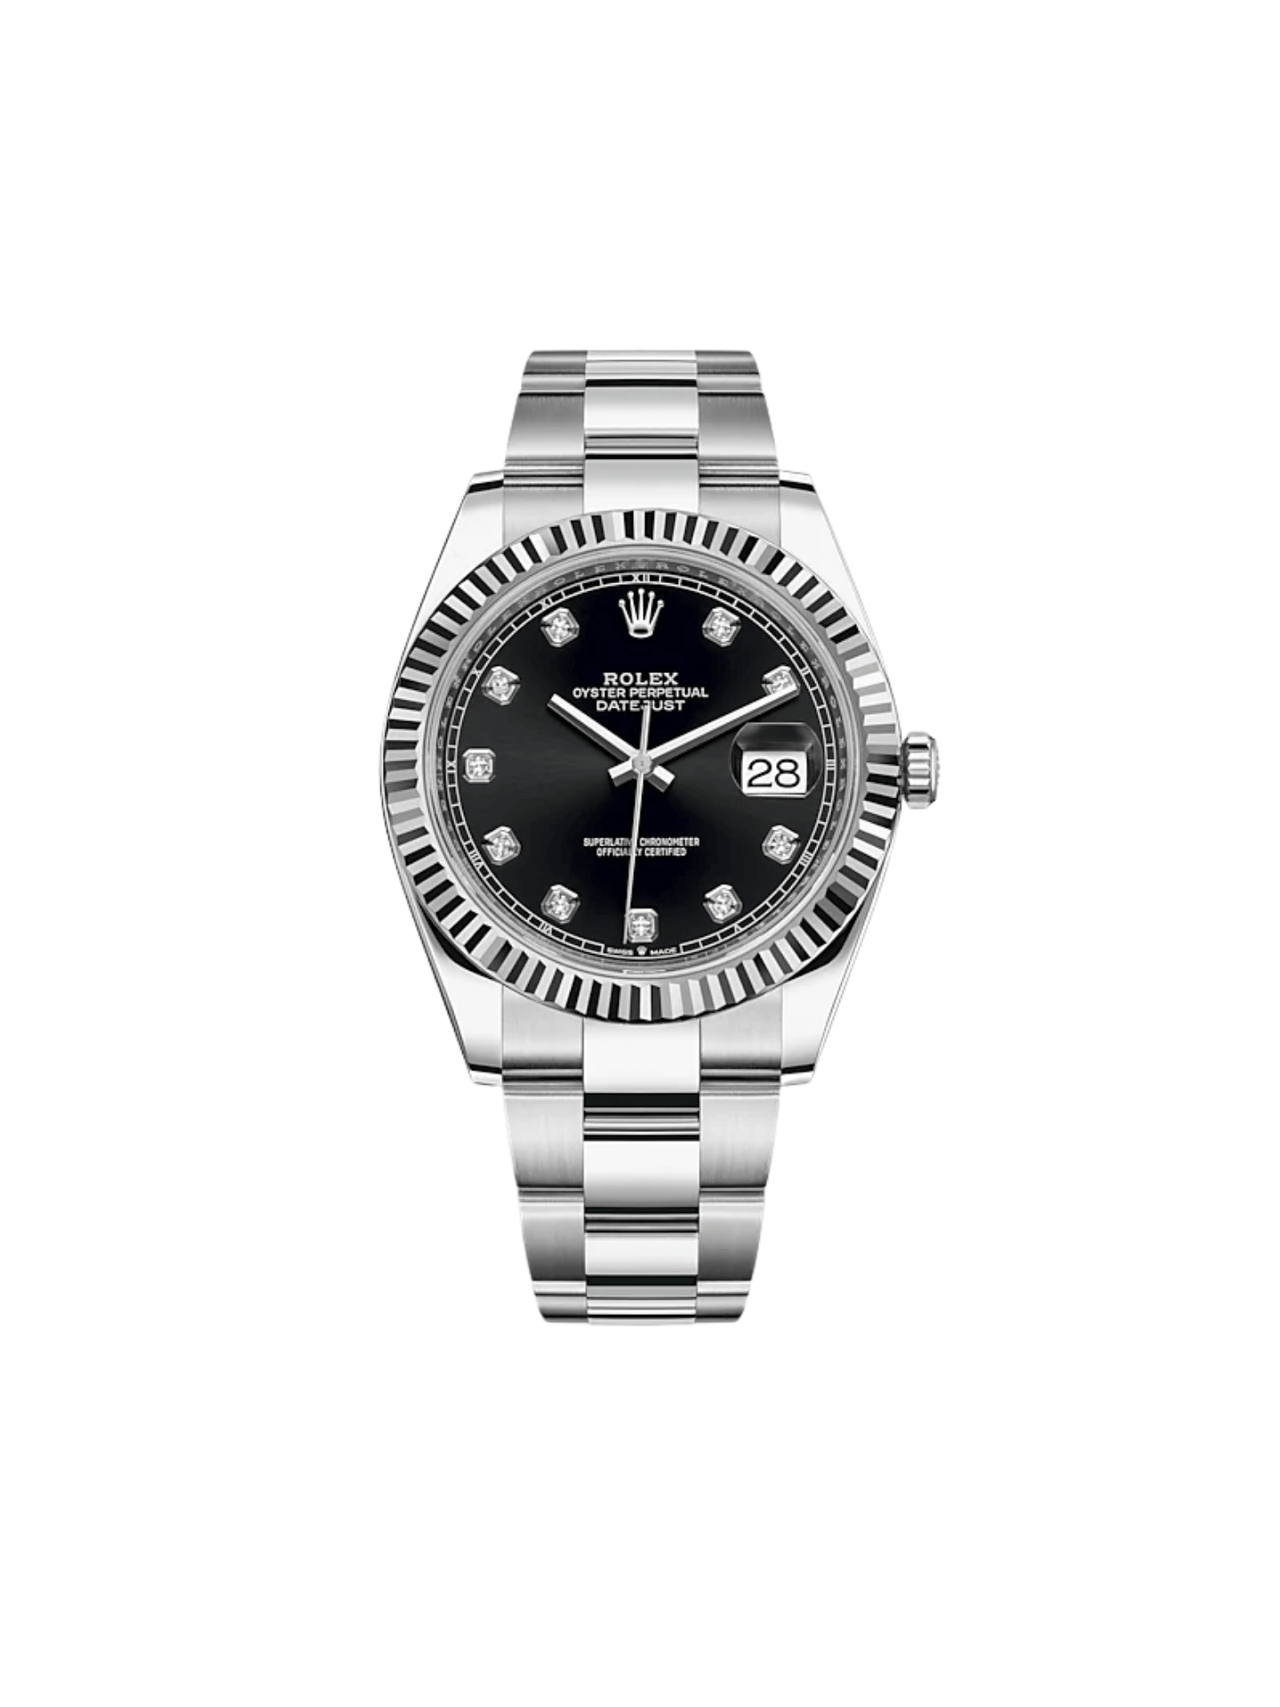 Luxury Watch Rolex Datejust 41 Stainless Steel & White Gold Black Diamond Dial 126334 Wrist Aficionado